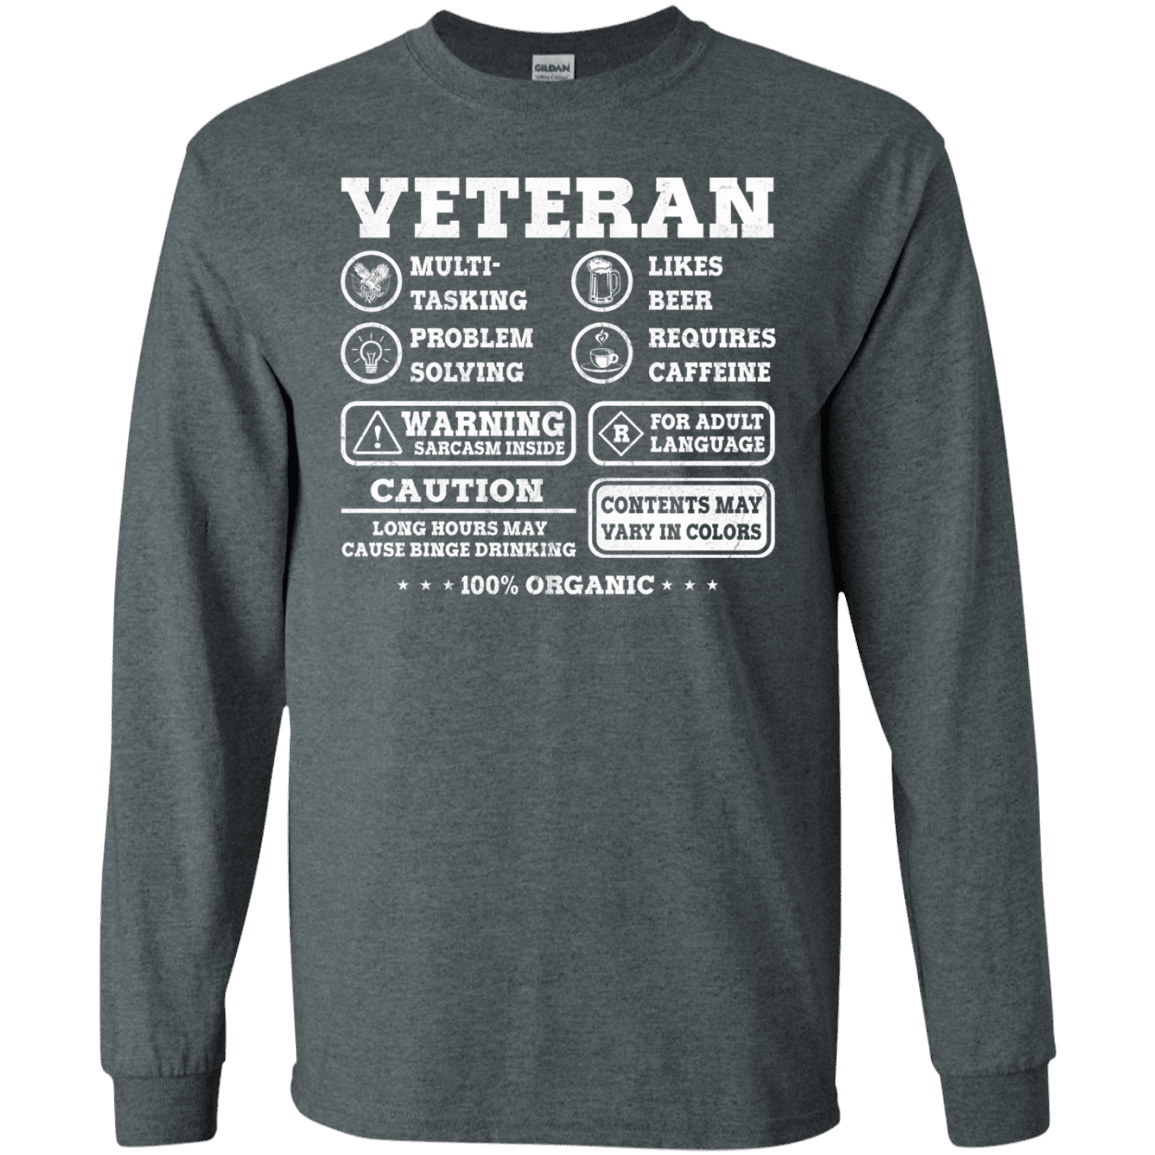 Military T-Shirt "Veteran Multitasking Sarcasm Men" Front-TShirt-General-Veterans Nation